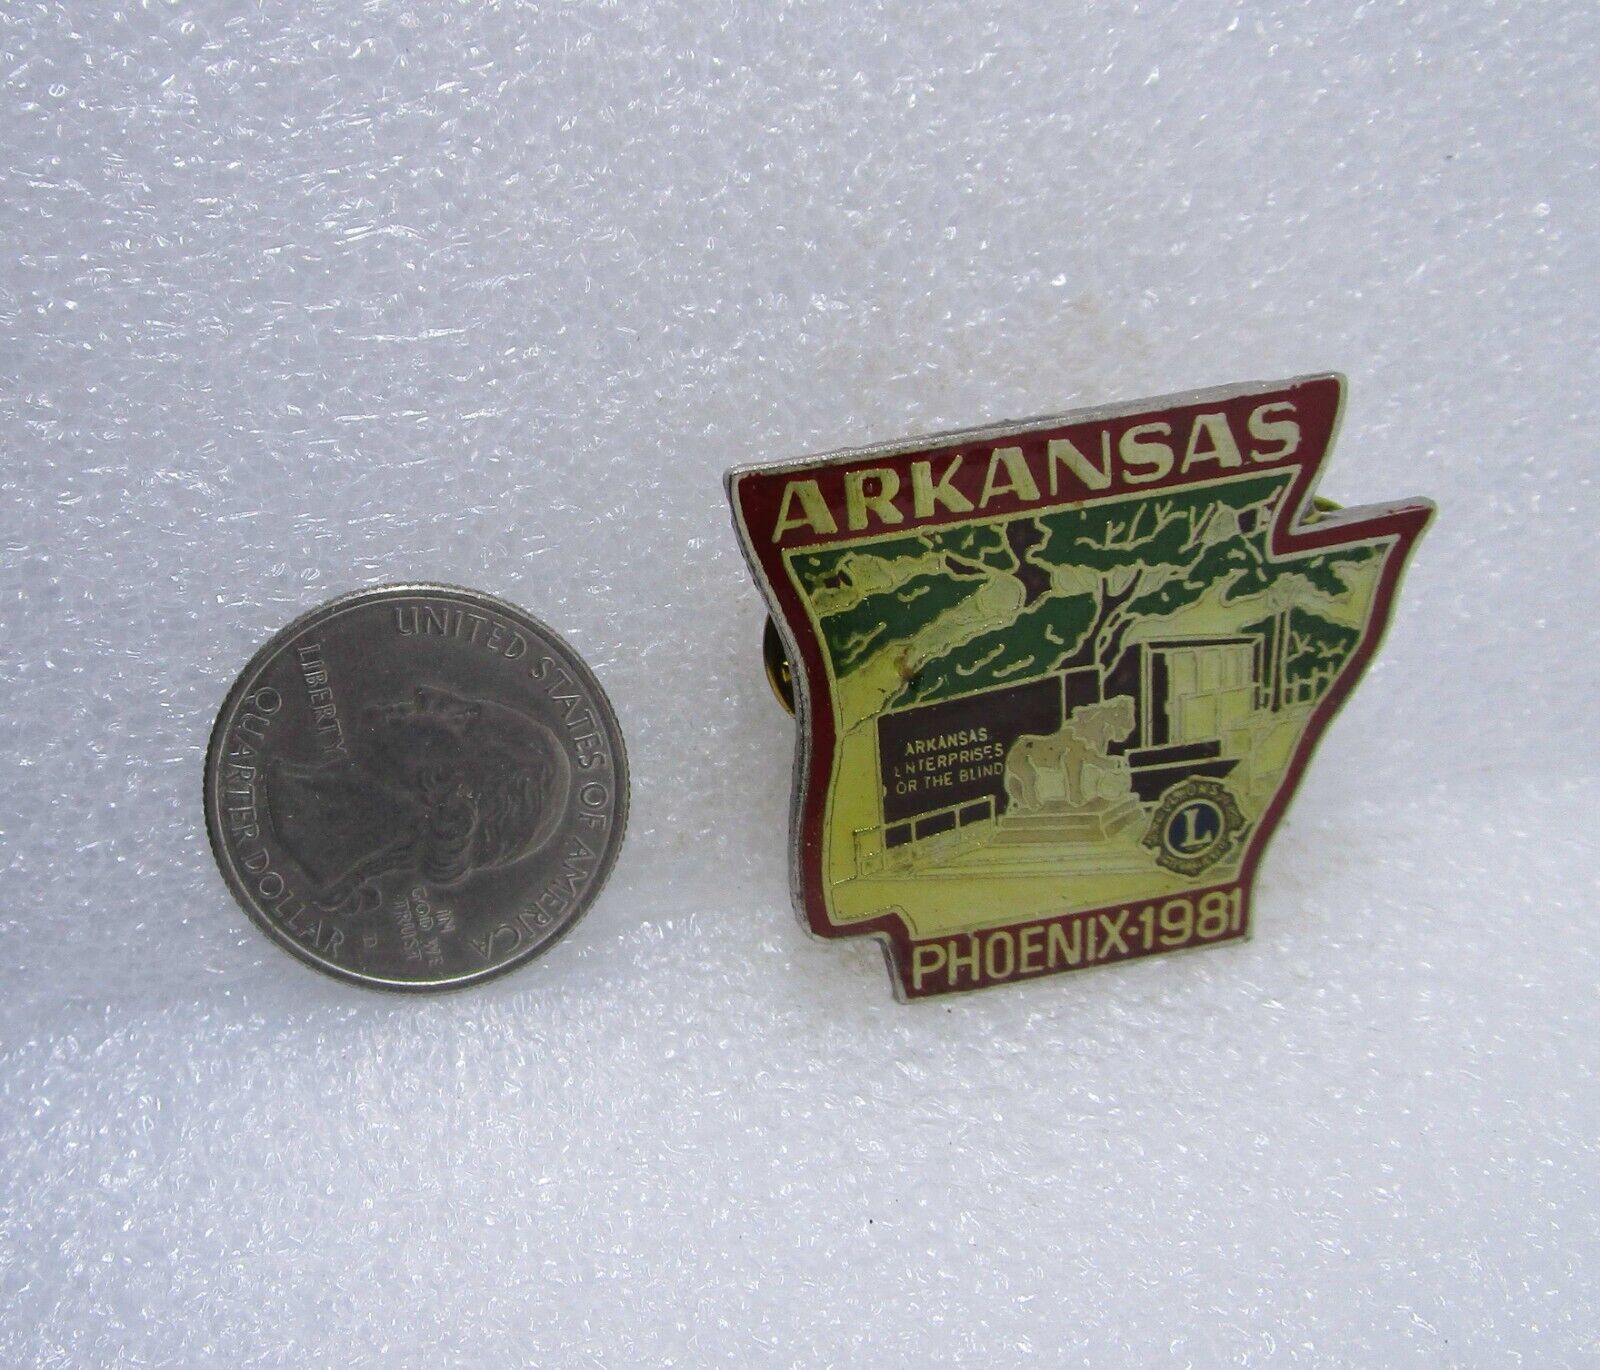 1981 Lions Club Arkansas - Phoenix Pin